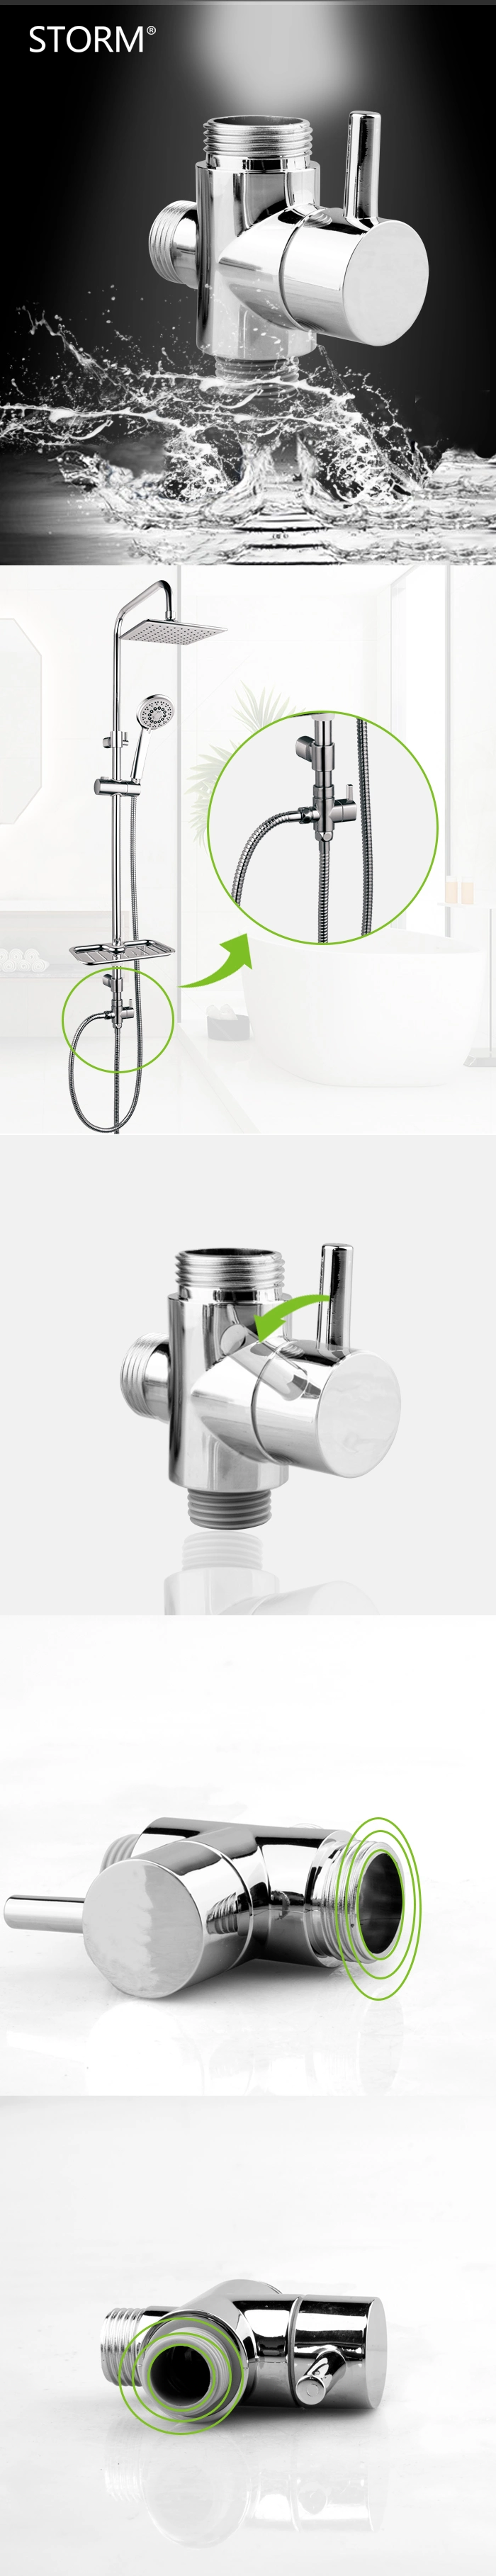 Bathroom Accessory Faucet Mixer 3-Way Valve Plastic Multi-Functional Shower Water Diverter